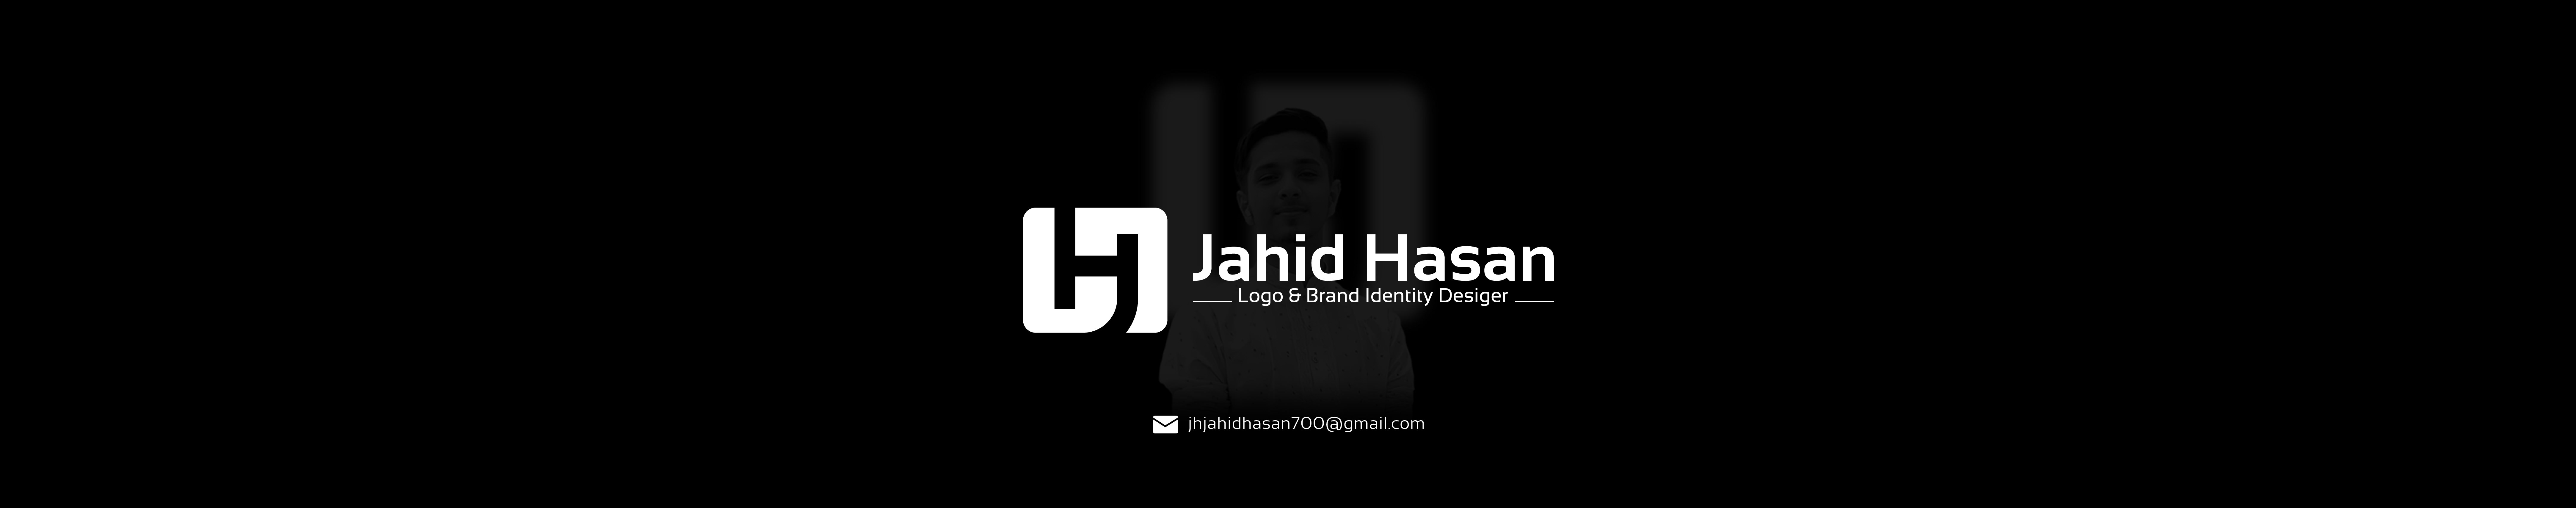 Banner profilu uživatele Jahid Hasan